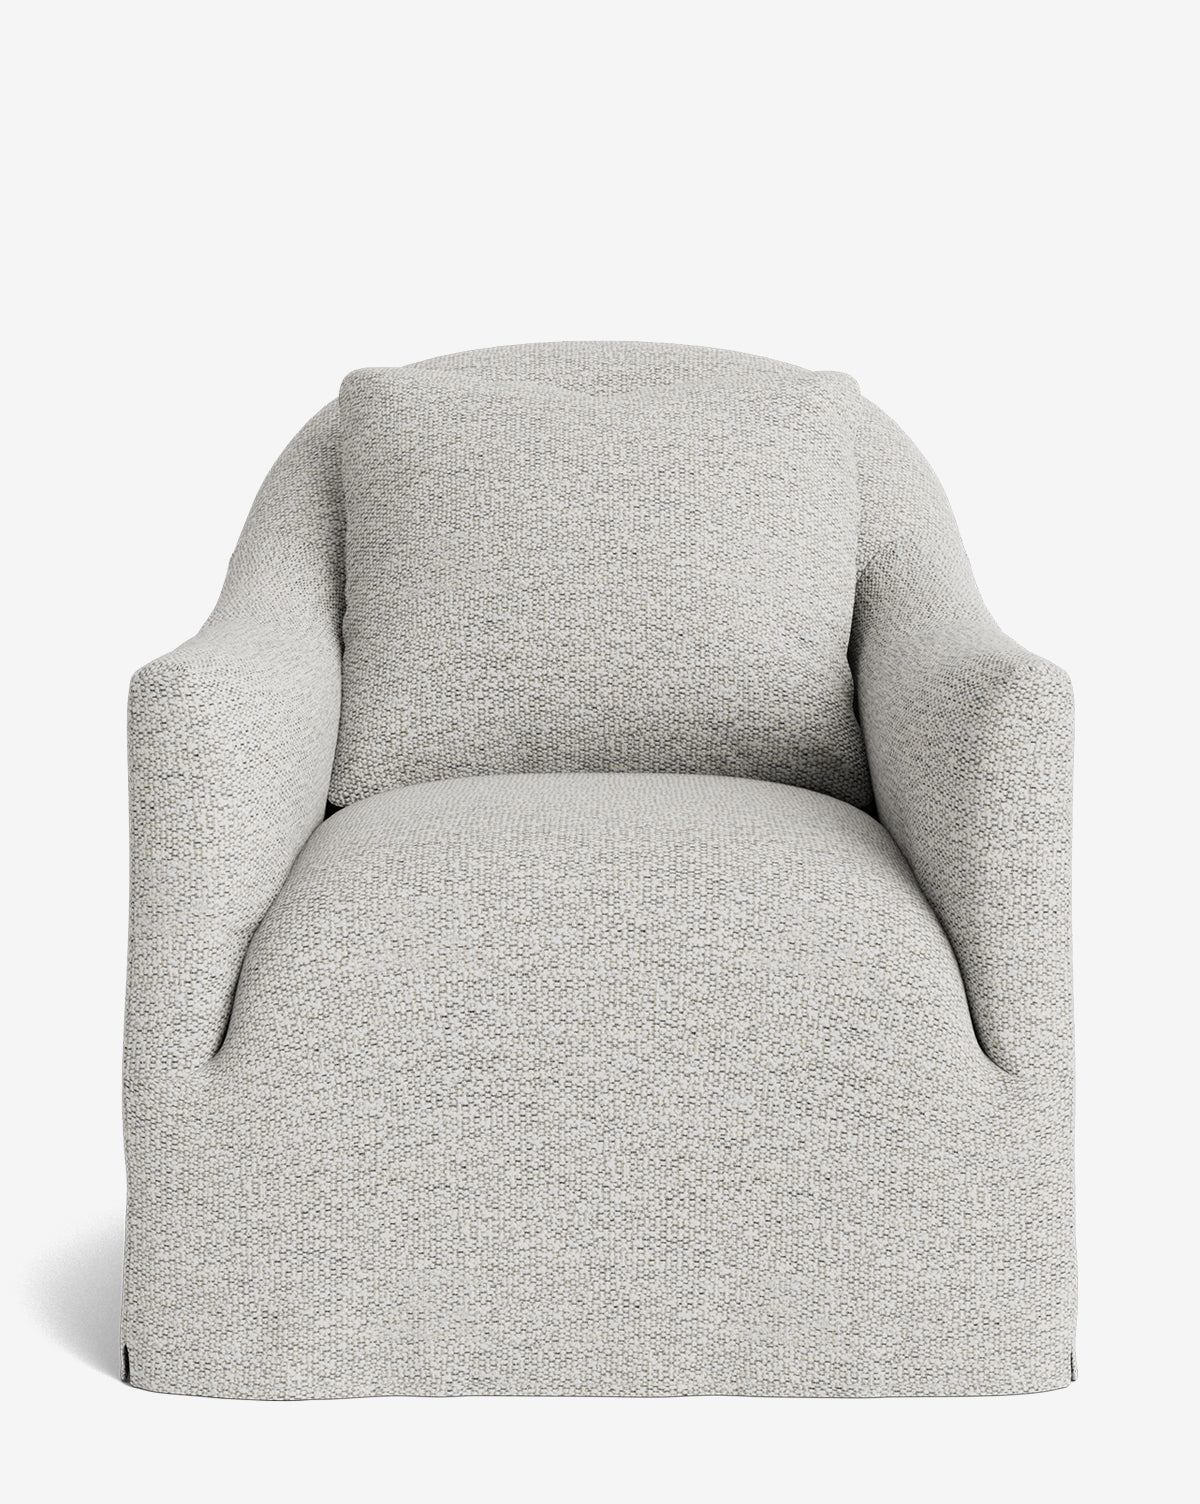 Rowe Fine Furniture, Trudeaux Slipcover Swivel Chair